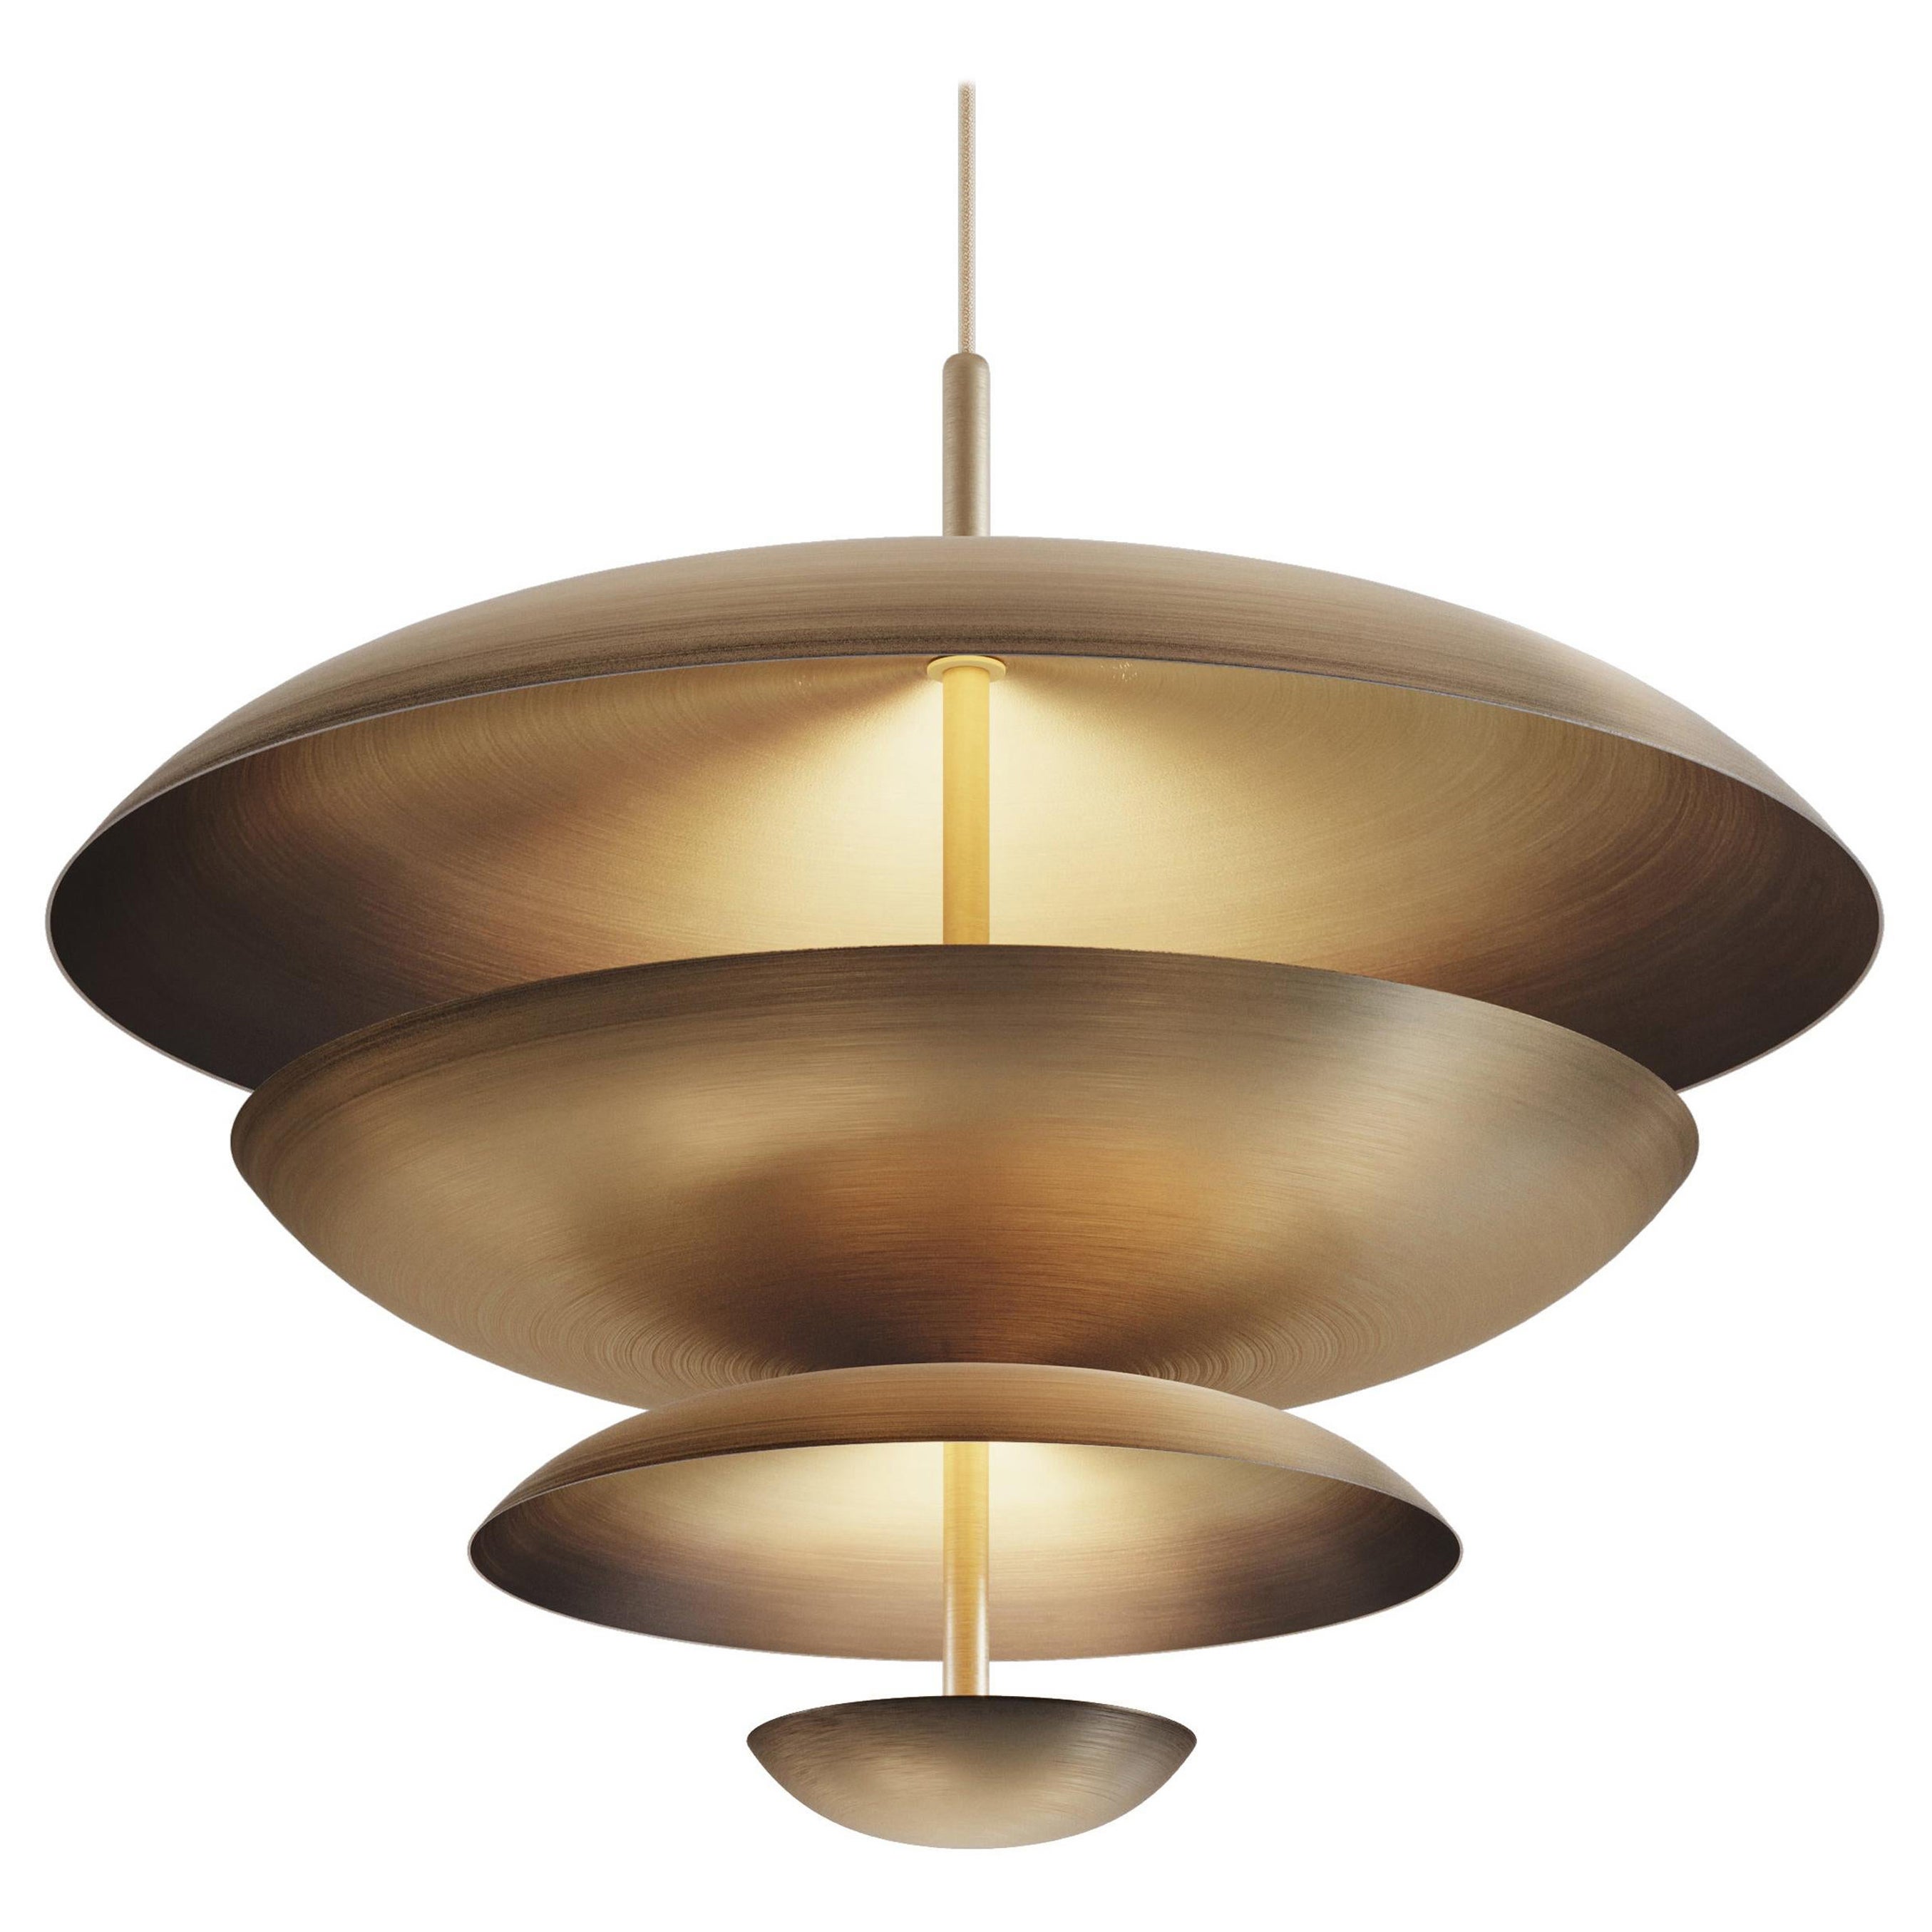 'Cosmic Ore Chandelier 70' Handmade Gradient Patinated Brass Ceiling Light